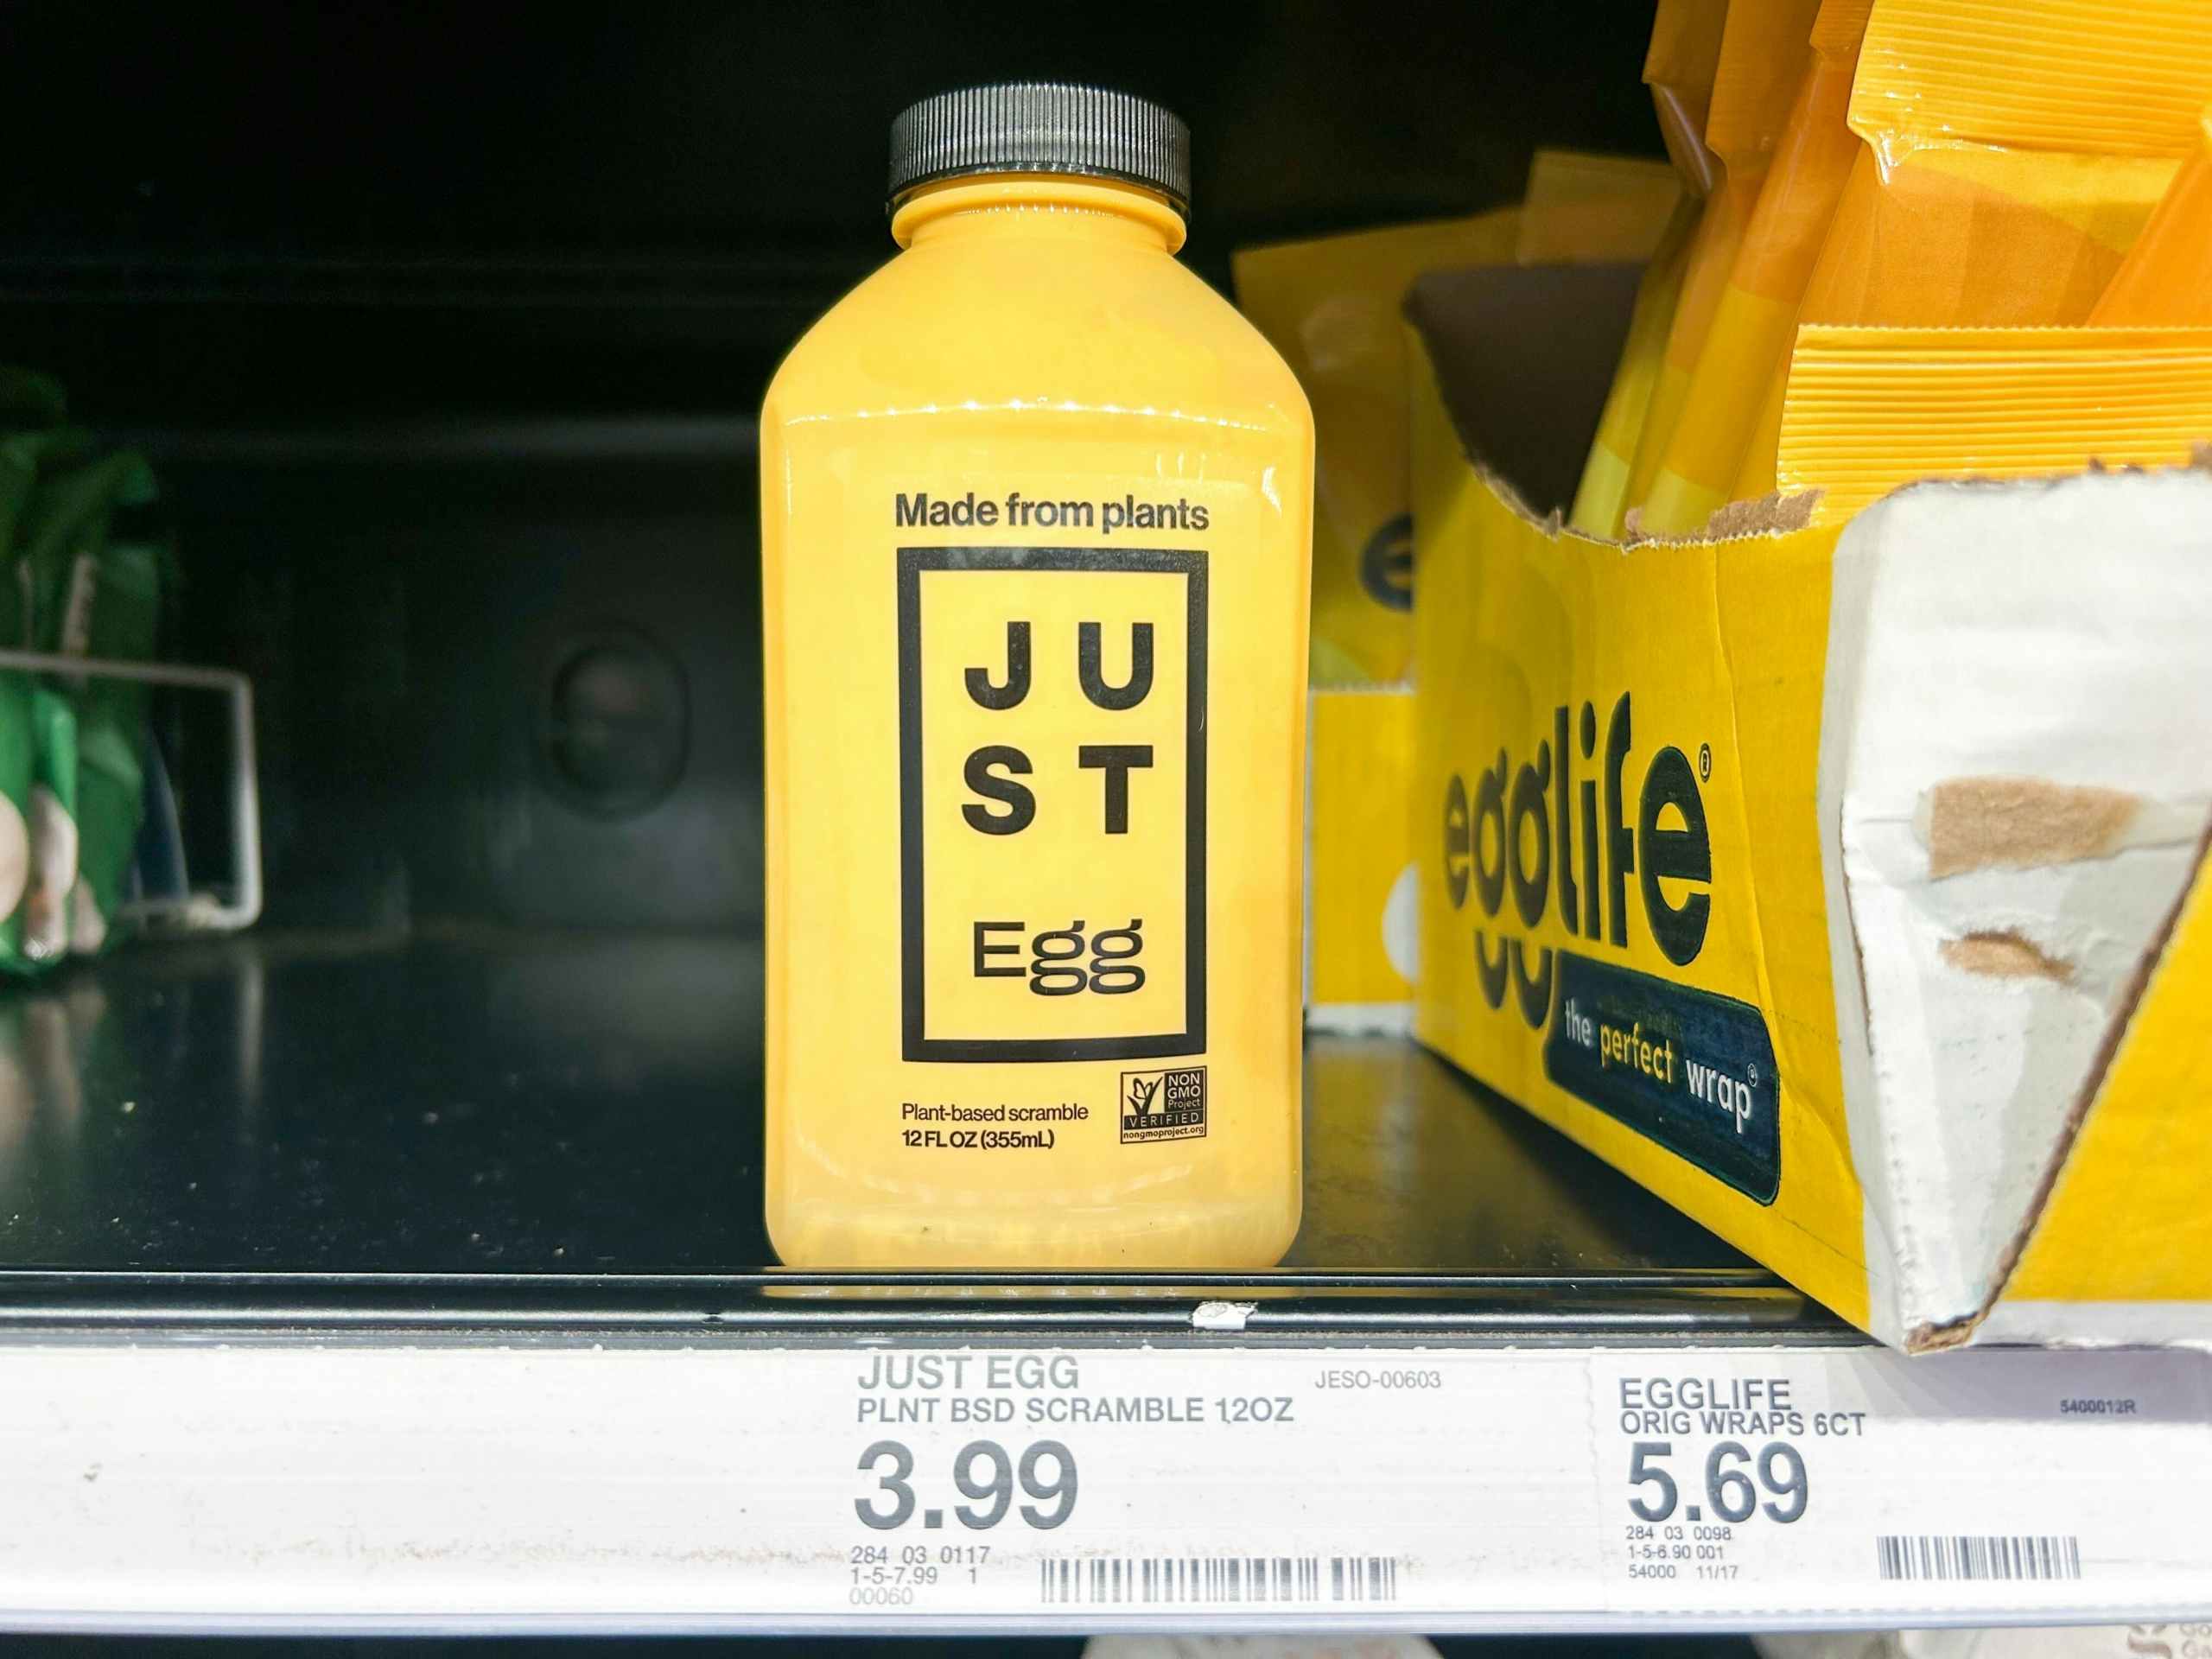 bottle of Just Egg at Target on store shelf